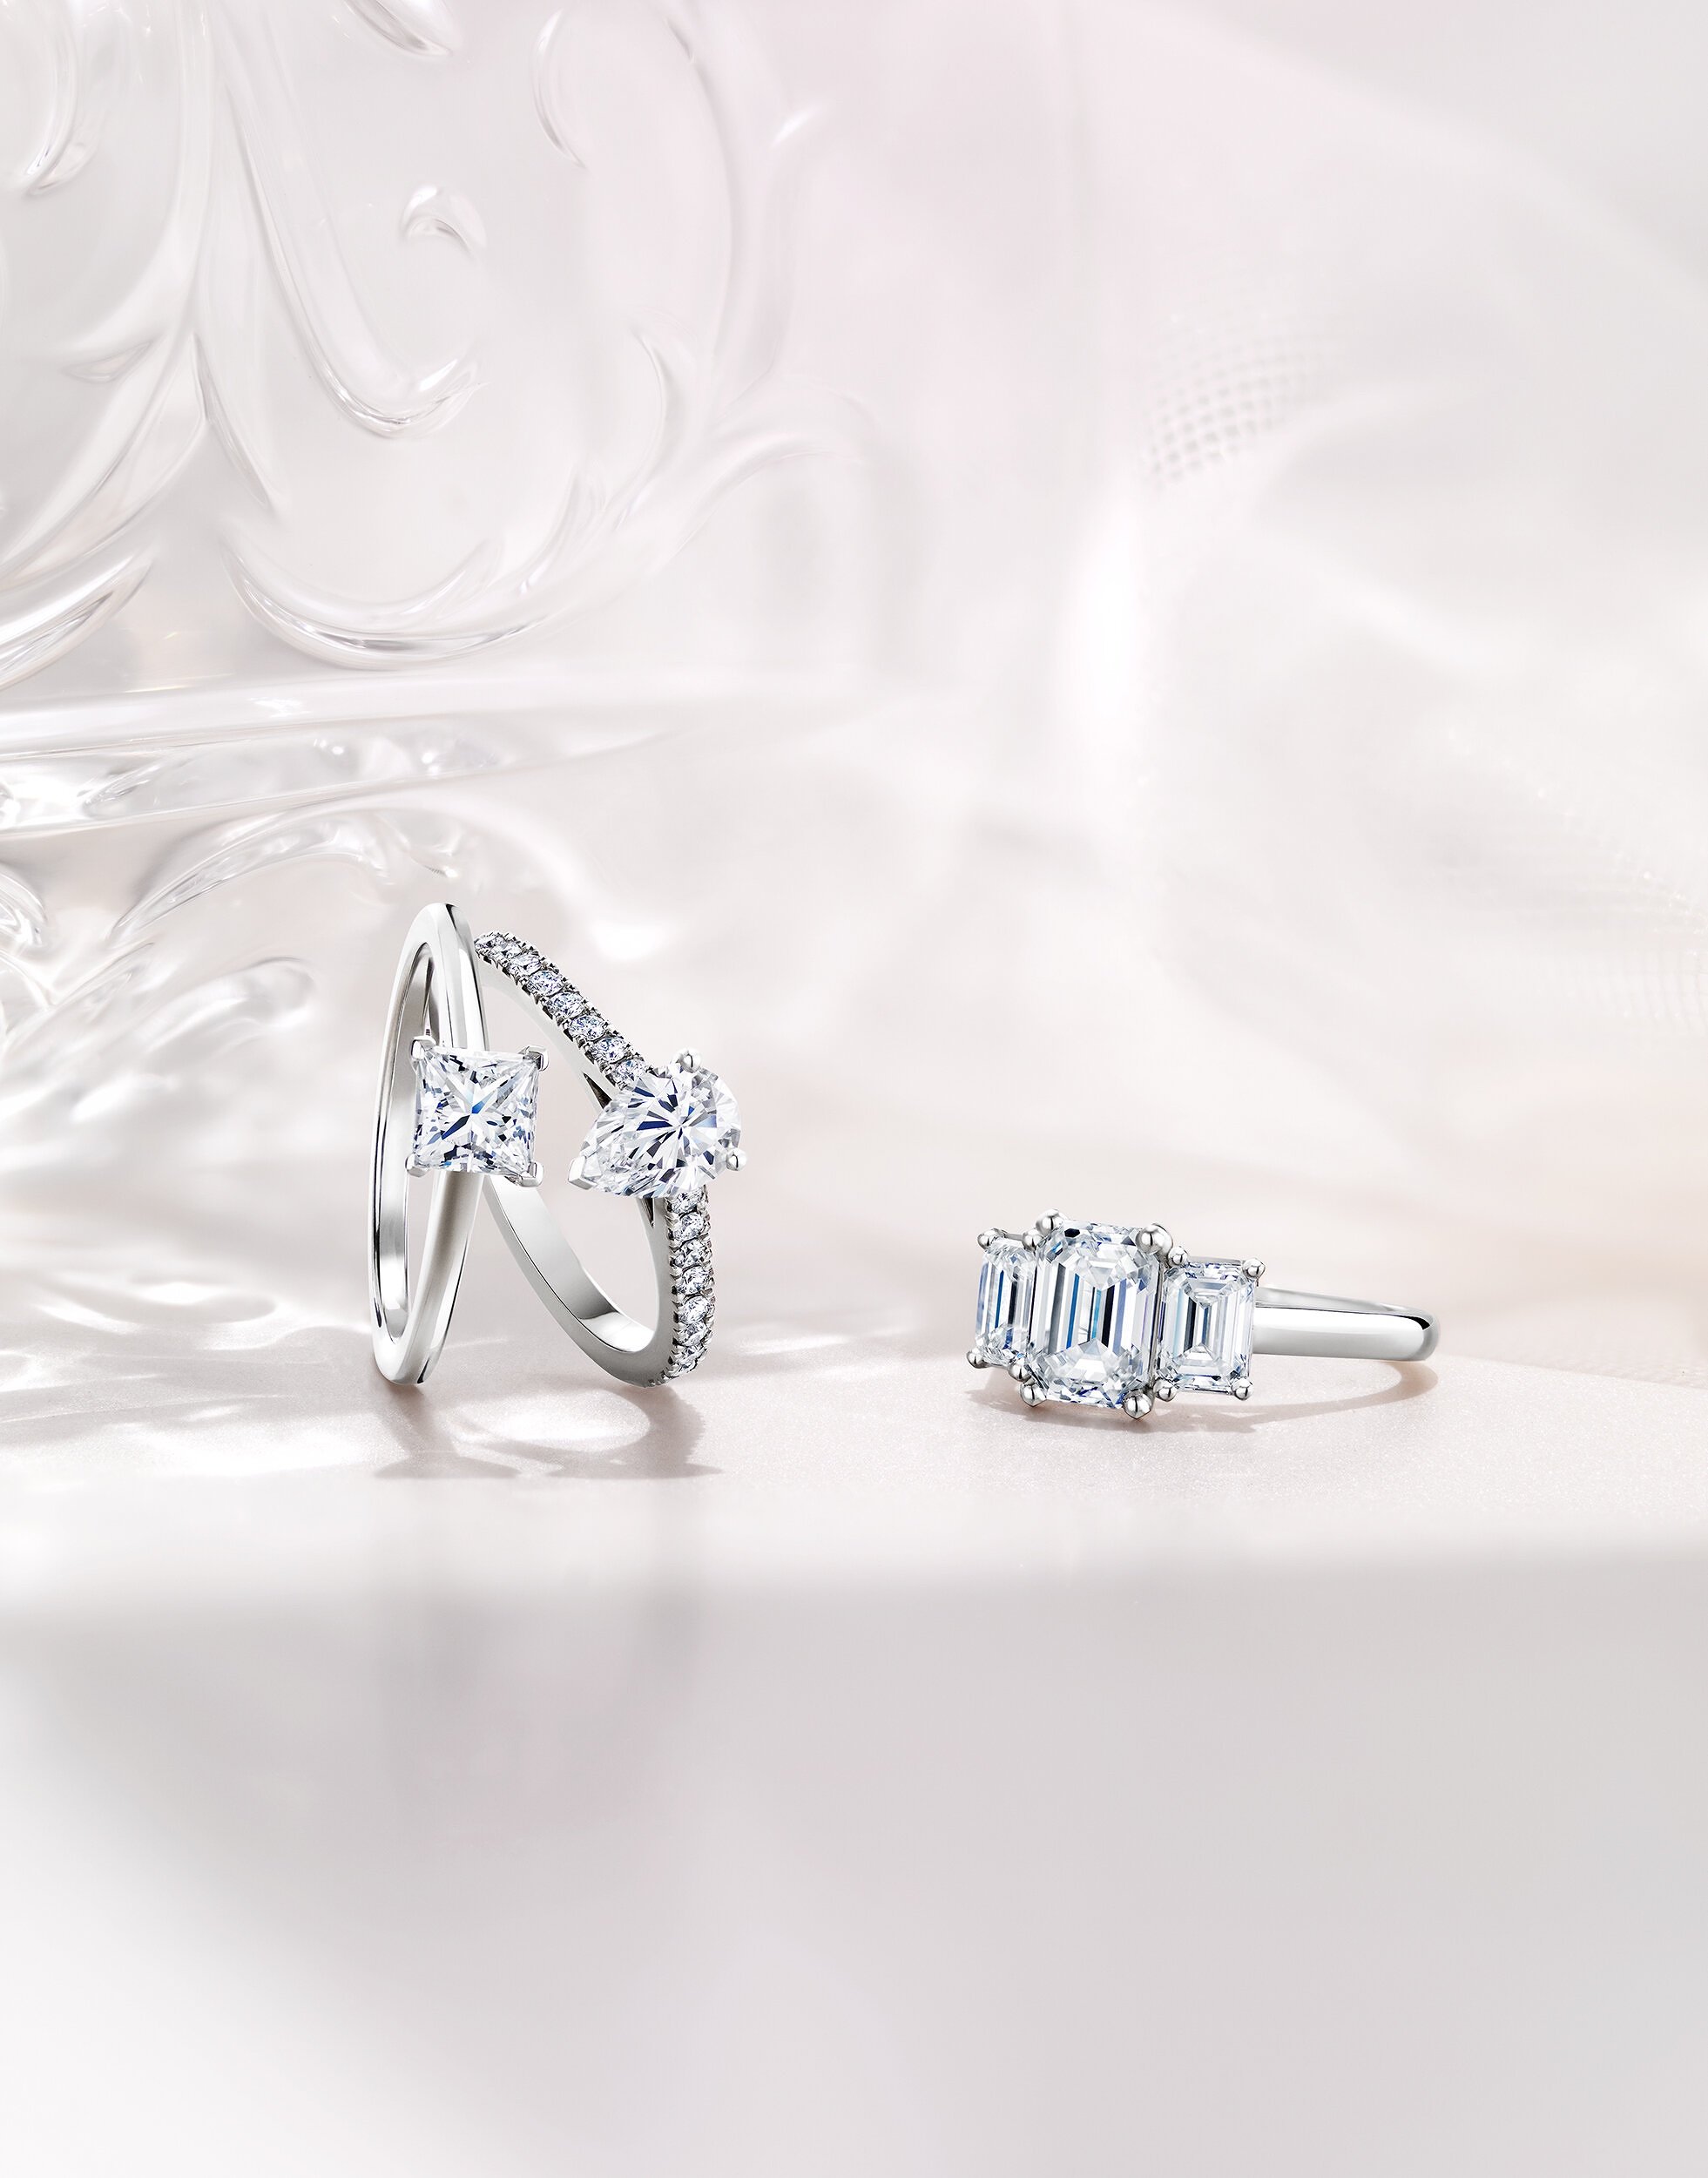  Bridal diamond engagement rings shot for De Beers 